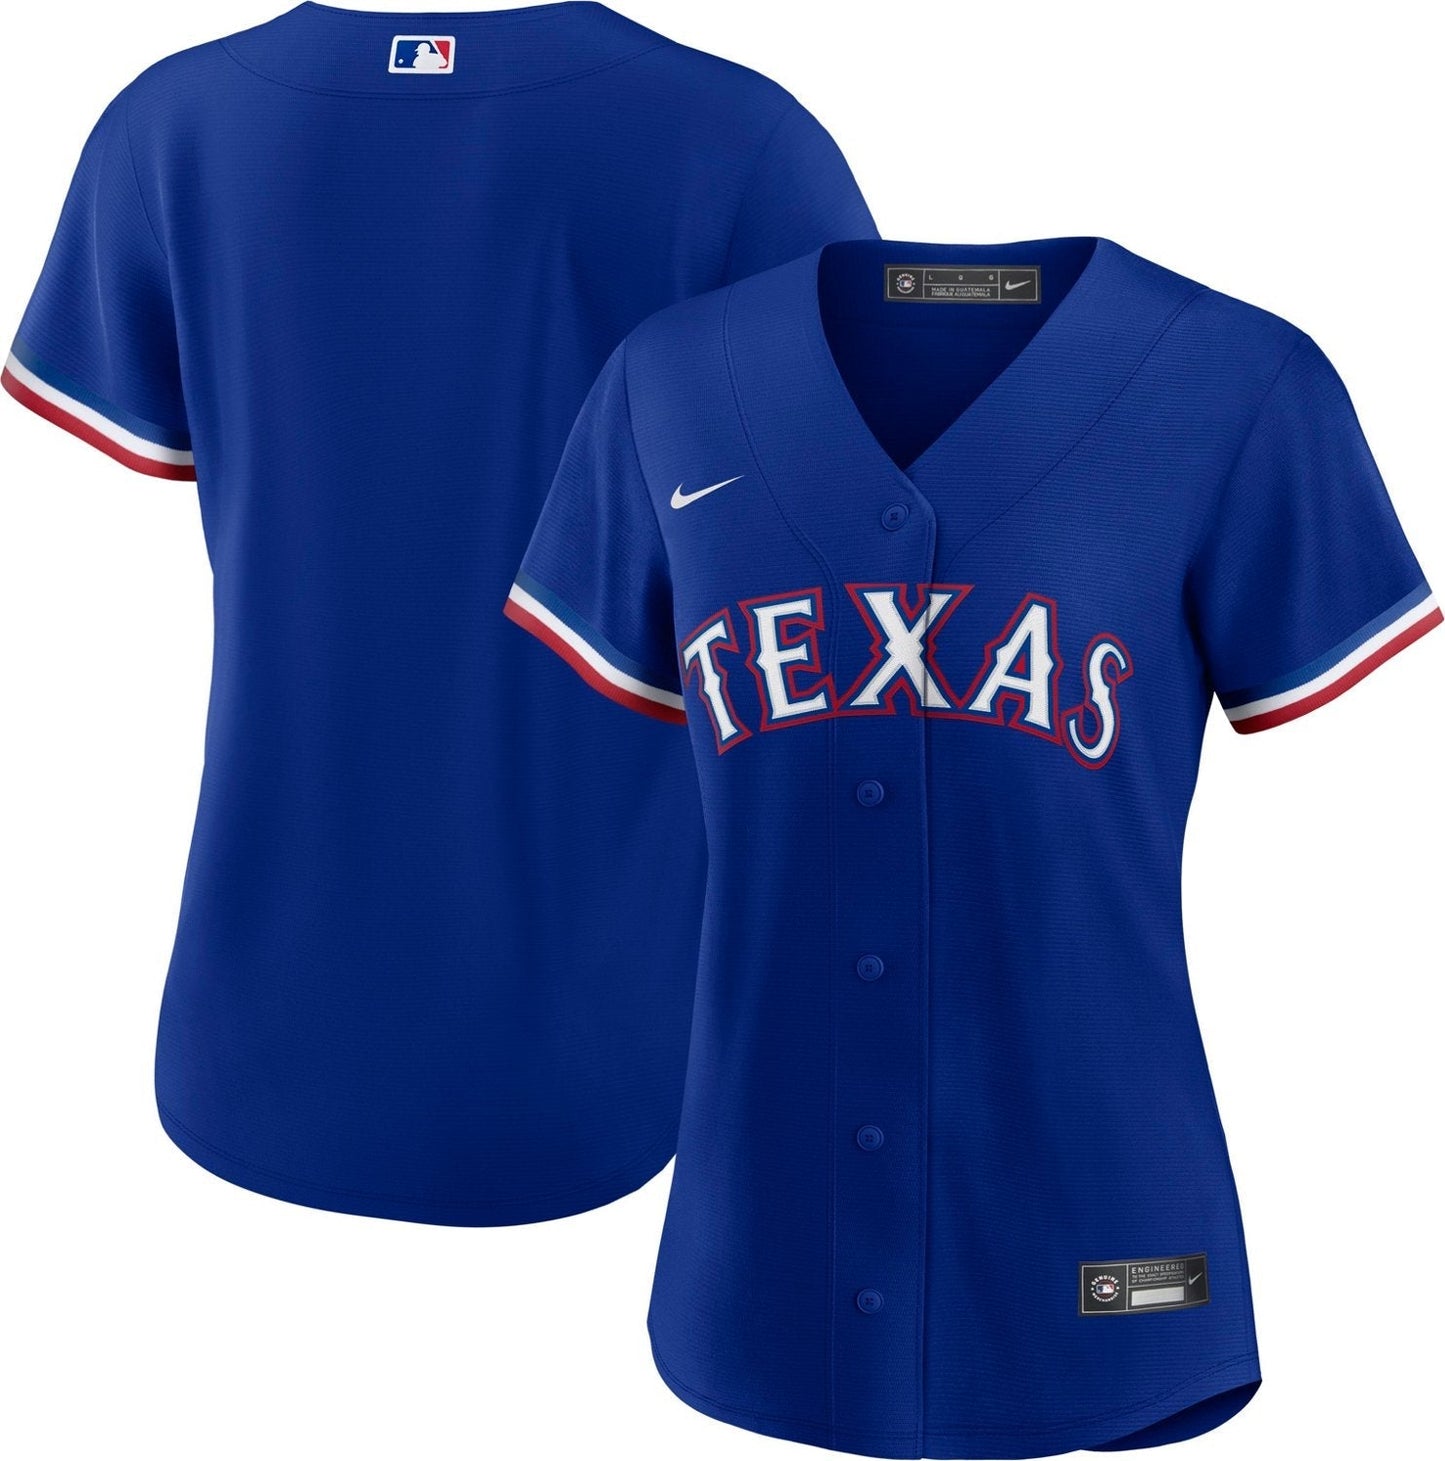 Nike Women's Texas Rangers Replica Jersey